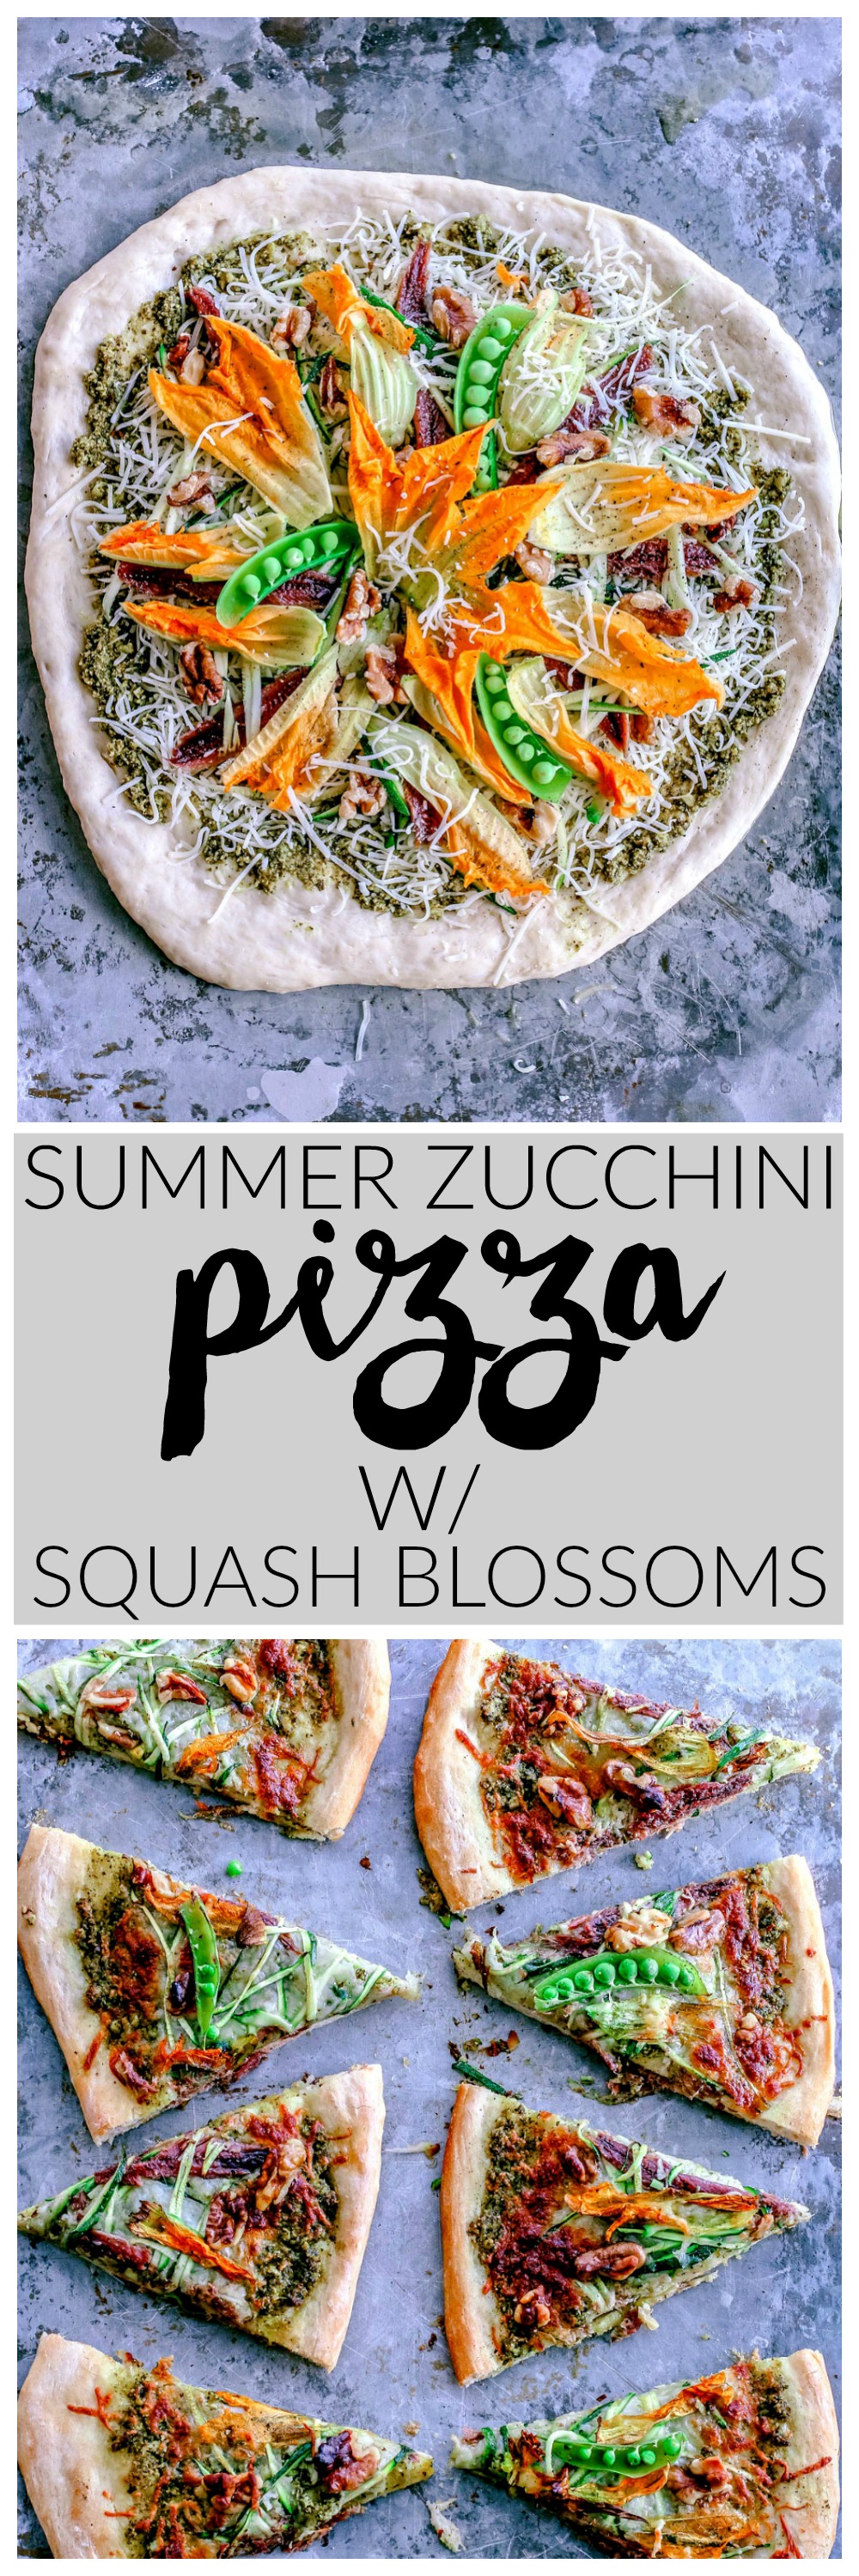 Seasonal Summer Zucchini + Pesto Pizza With Squash Blossoms | Killing Thyme